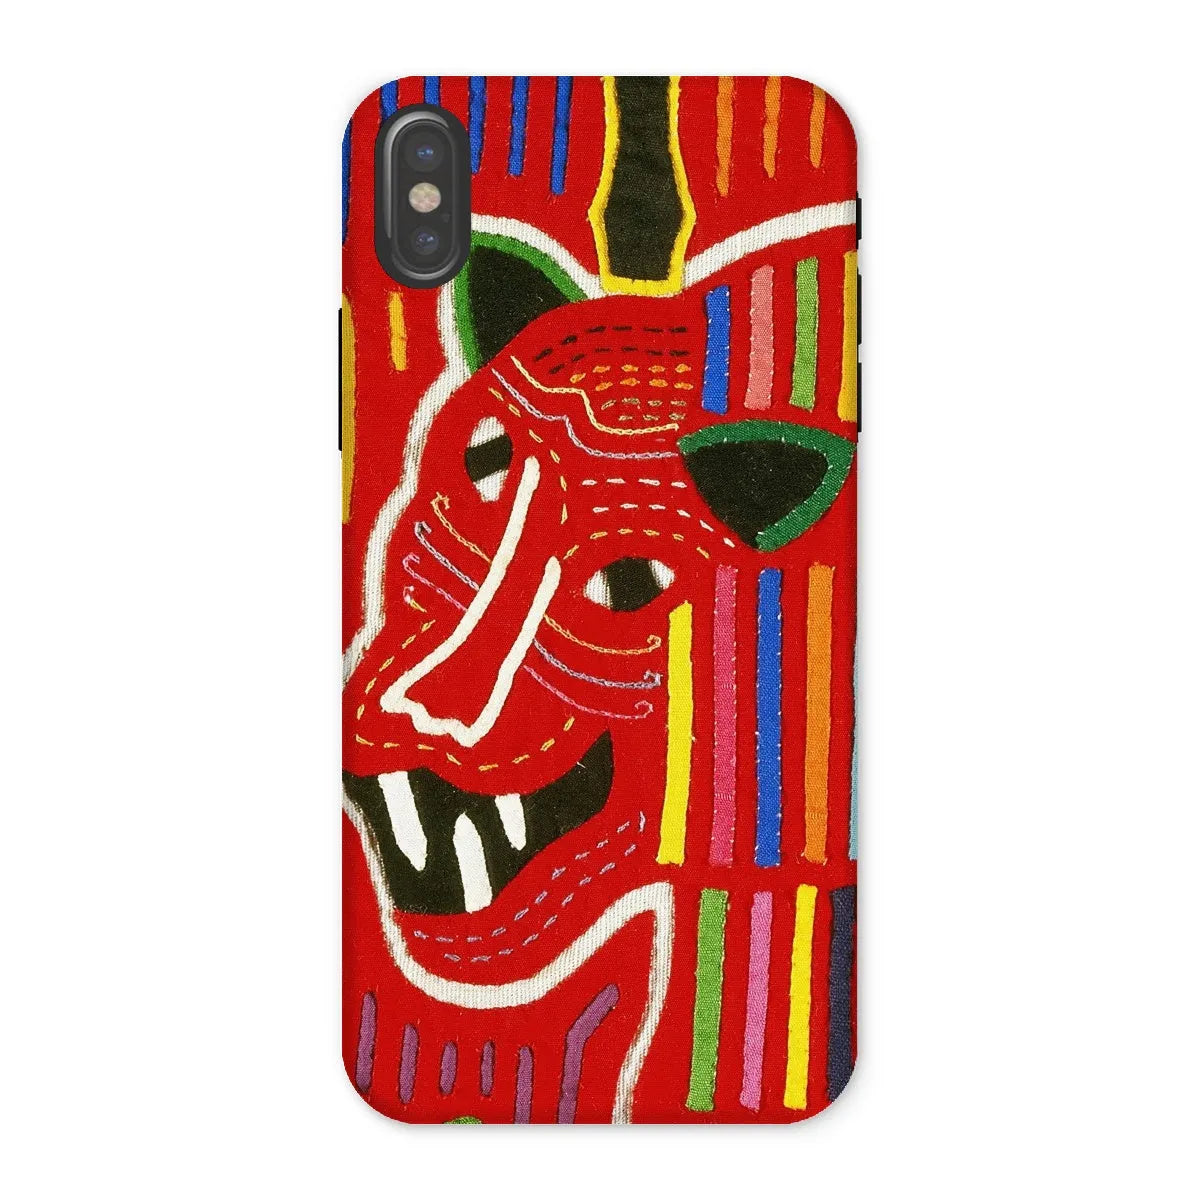 Roaring Tiger - Mola Needlework Art Phone Case - Iphone x / Matte - Mobile Phone Cases - Aesthetic Art